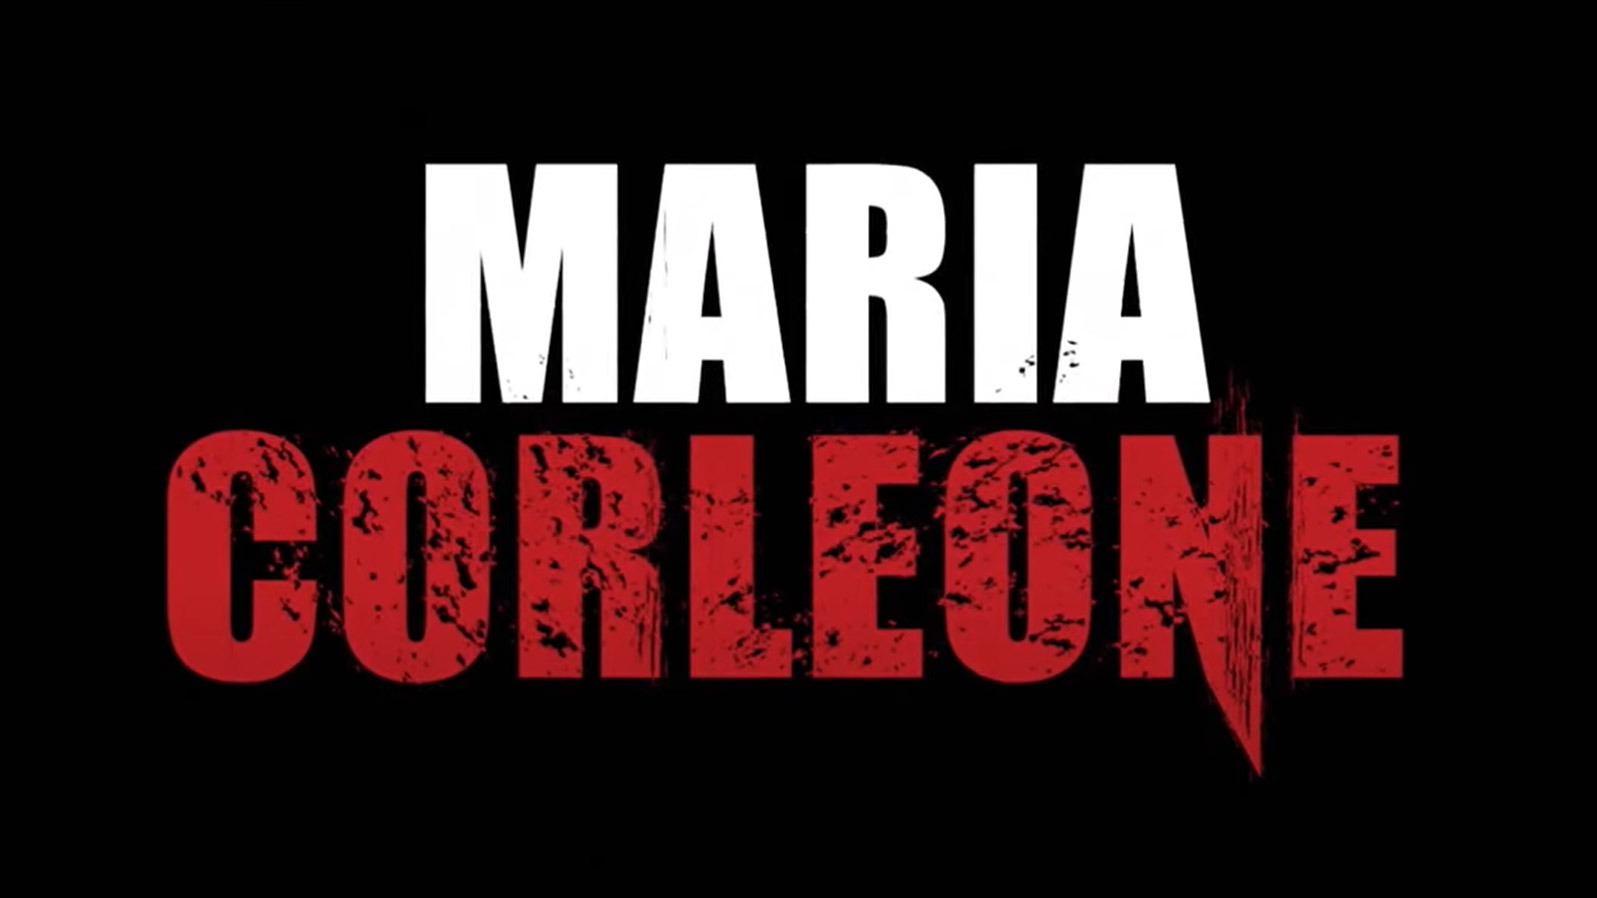 Maria Corleone, fiction Mediaset su Canale 5, banner logo wide